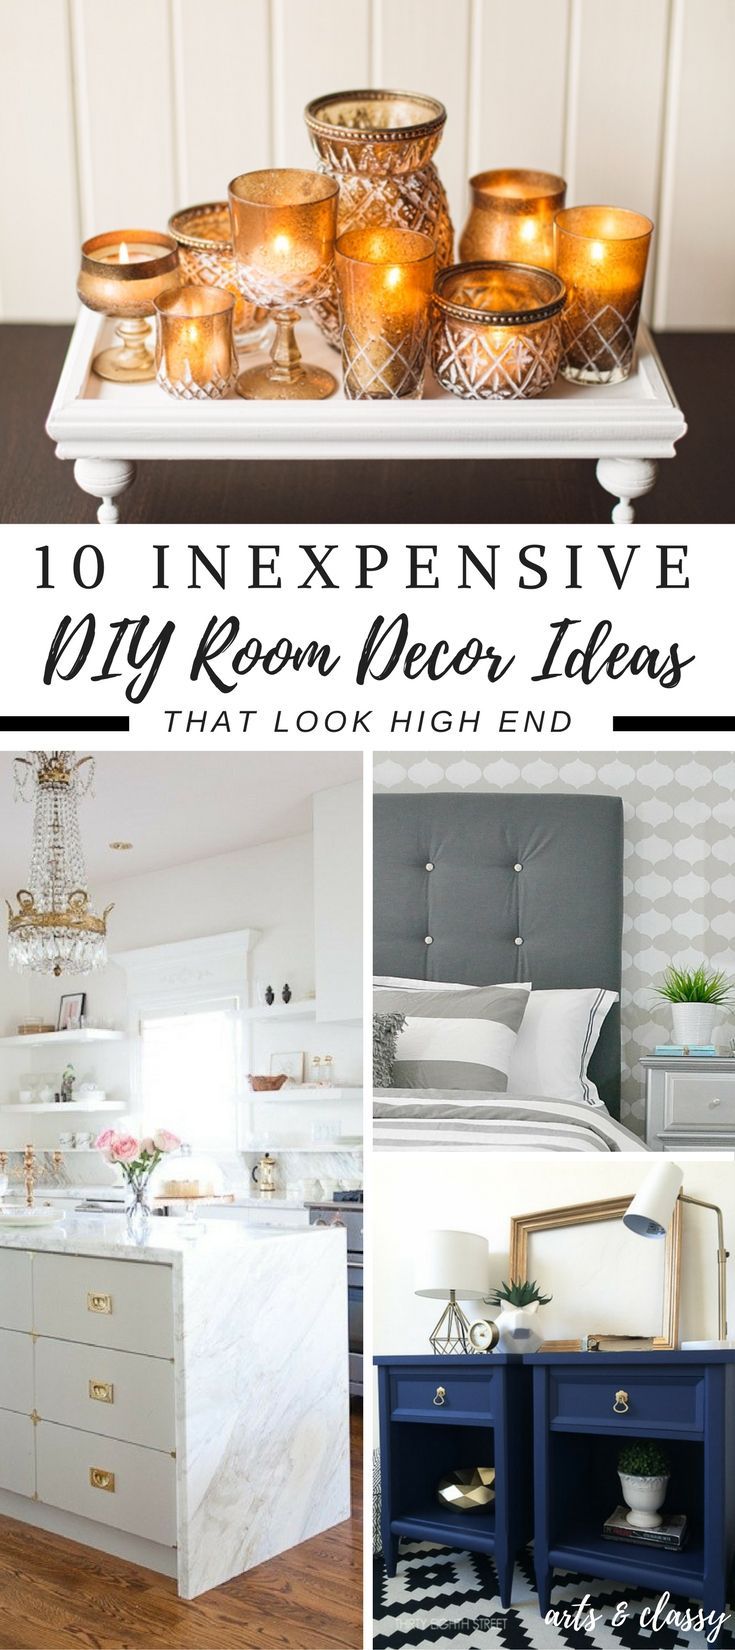 19 diy Home Decor inexpensive ideas